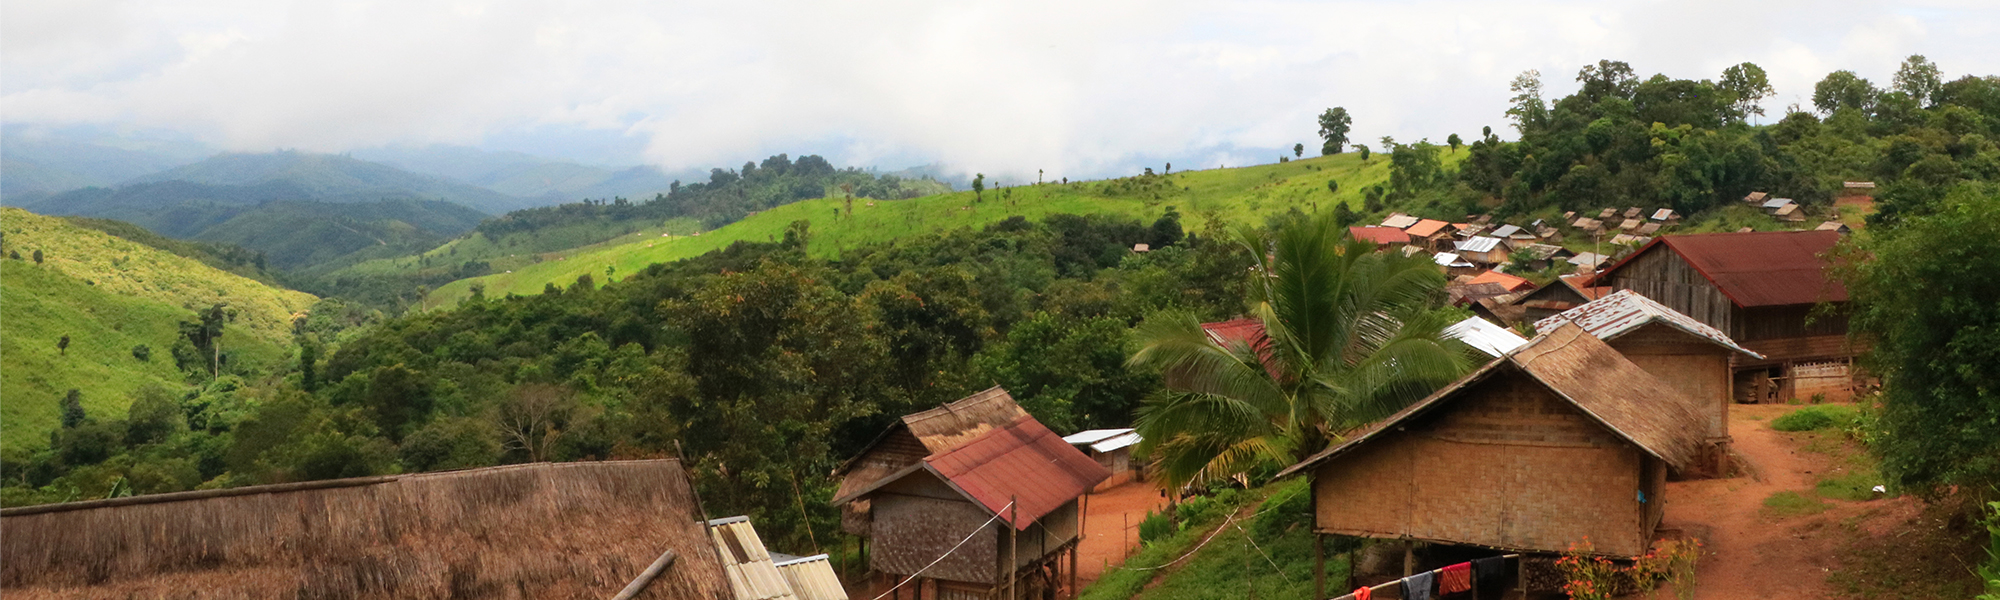 Landsby med hus i frodig fjellområde i Laos